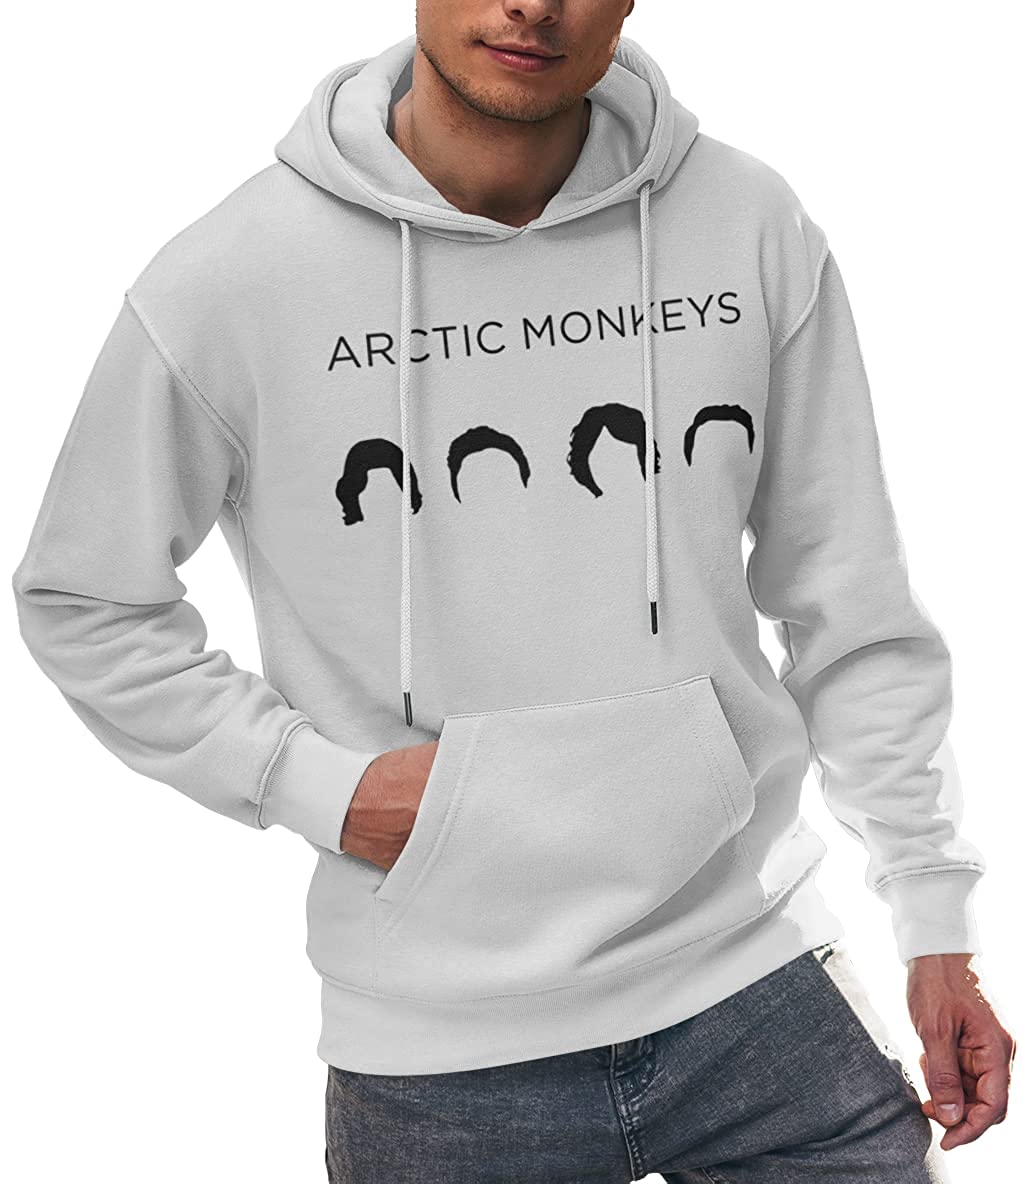 Unleash Your Love for Arctic Monkeys with Merchandise